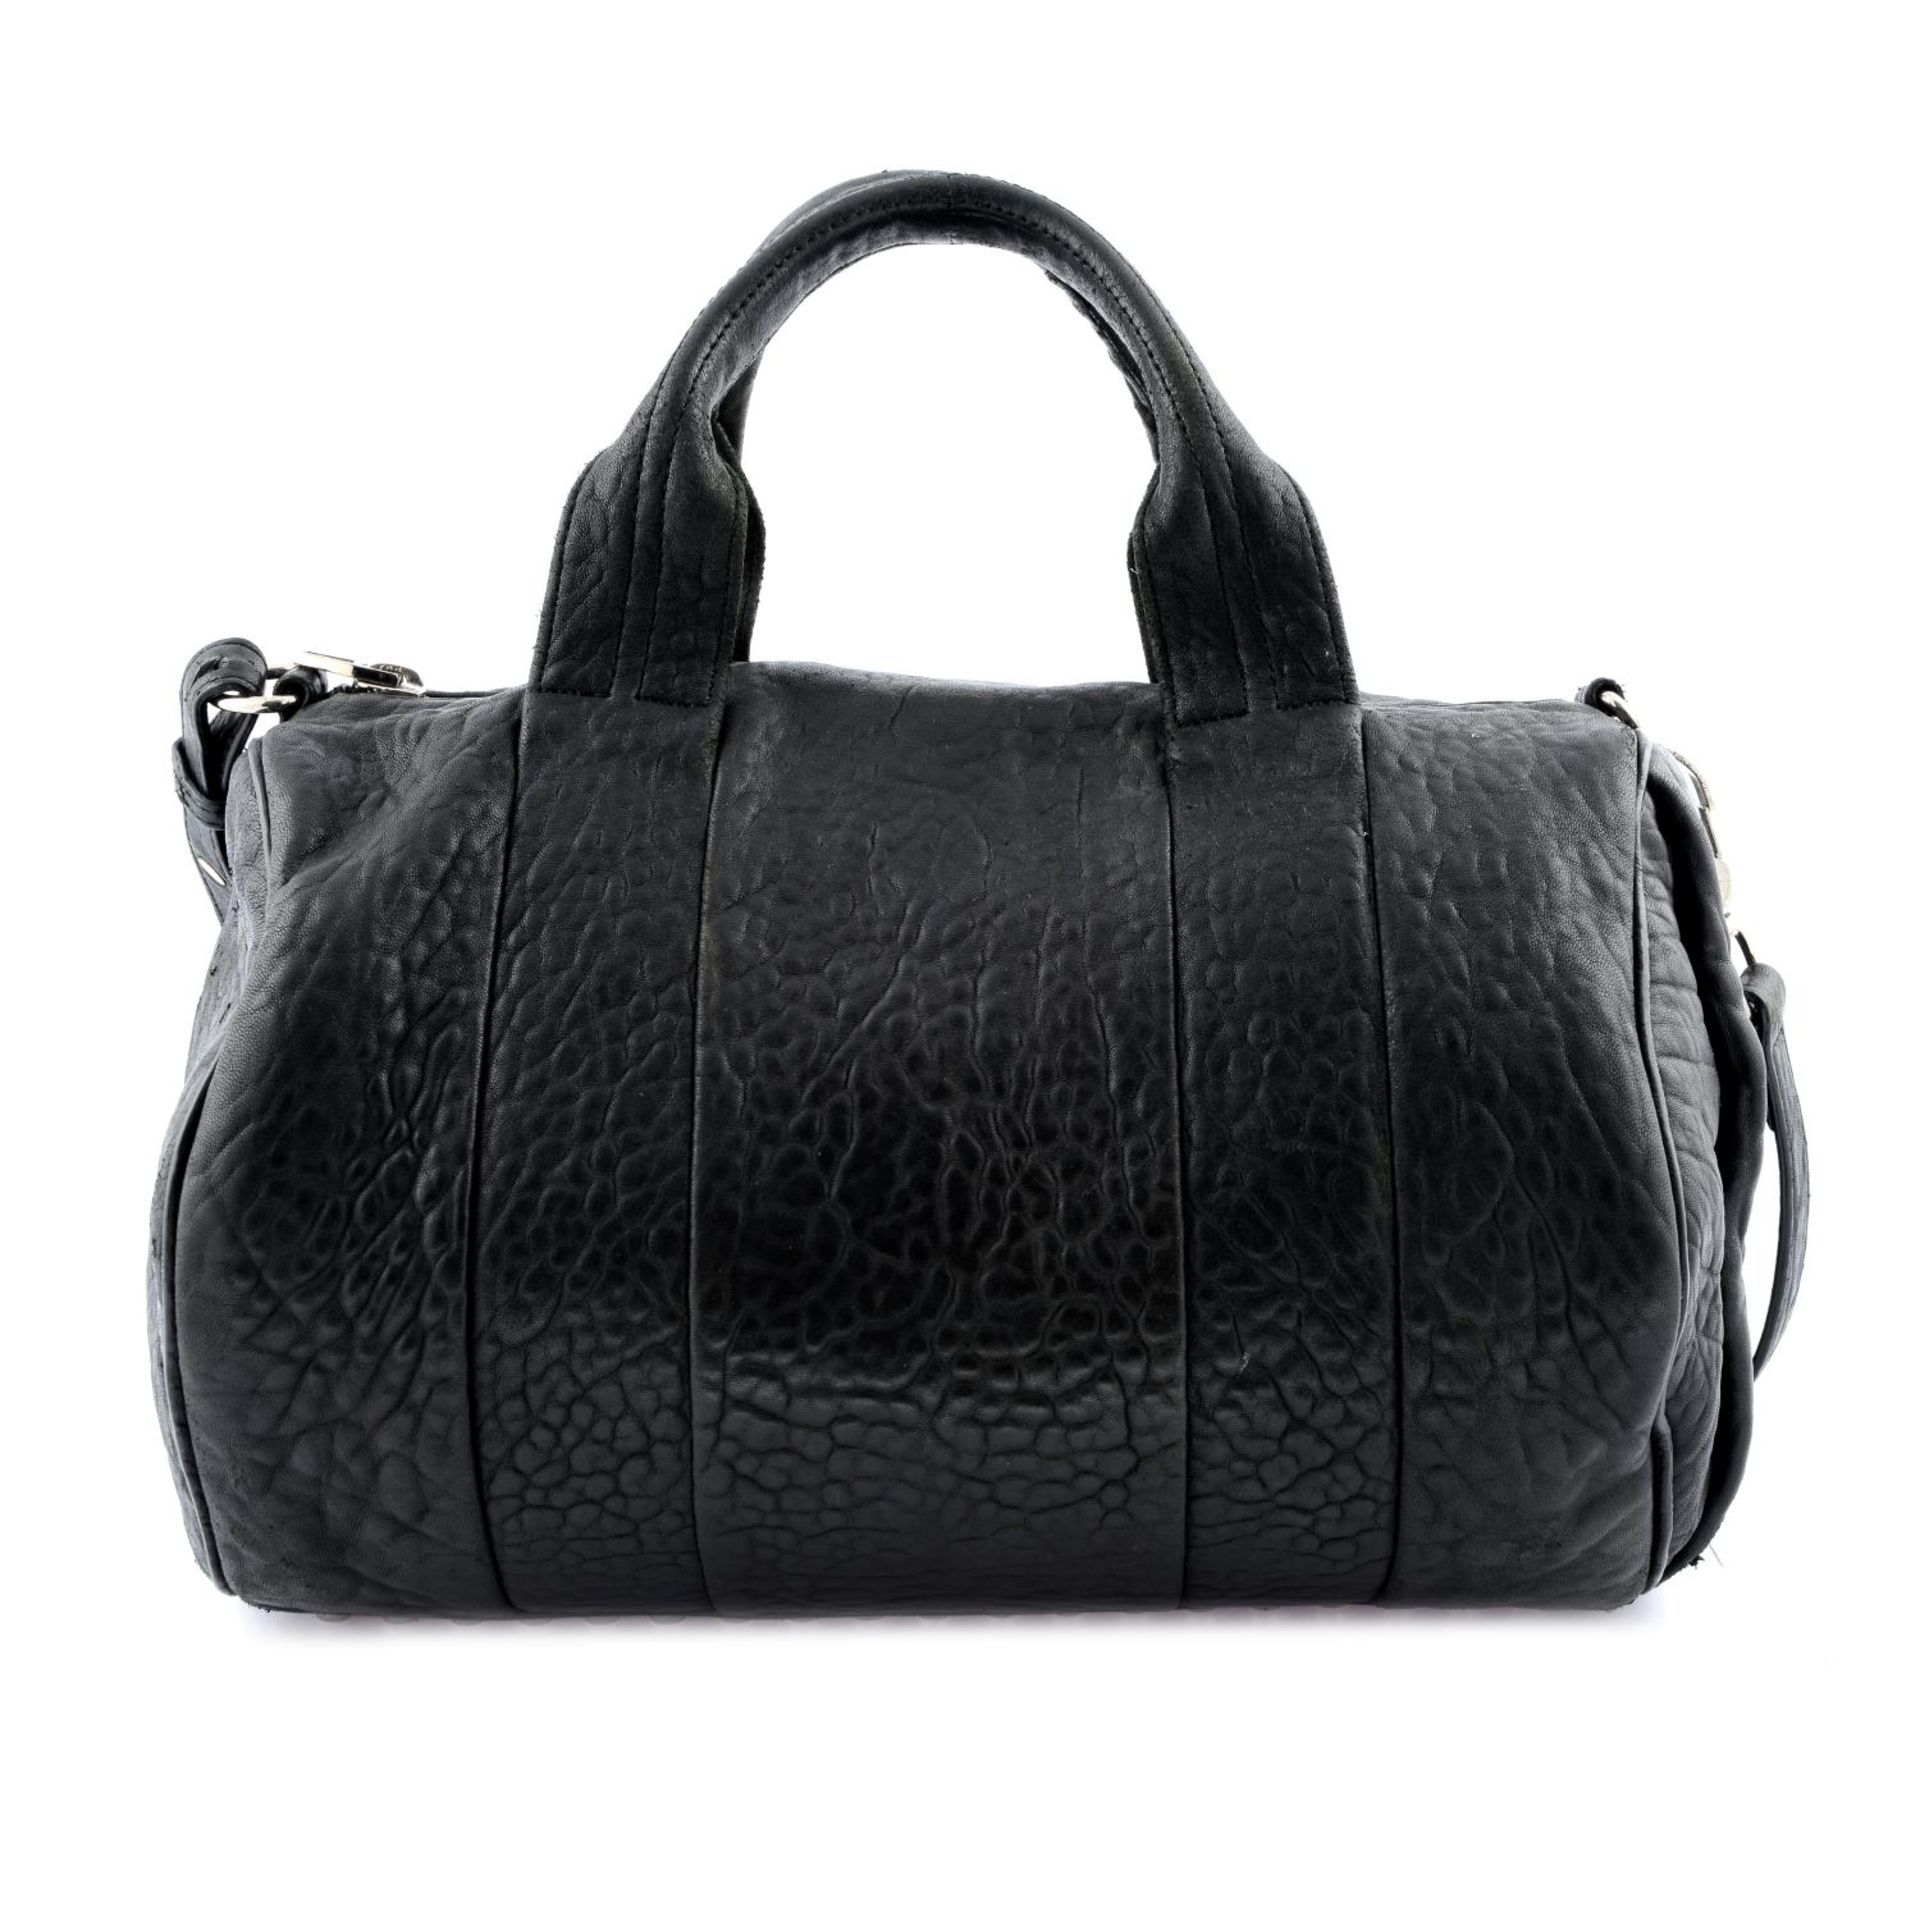 ALEXANDER WANG - a Rocco leather handbag.